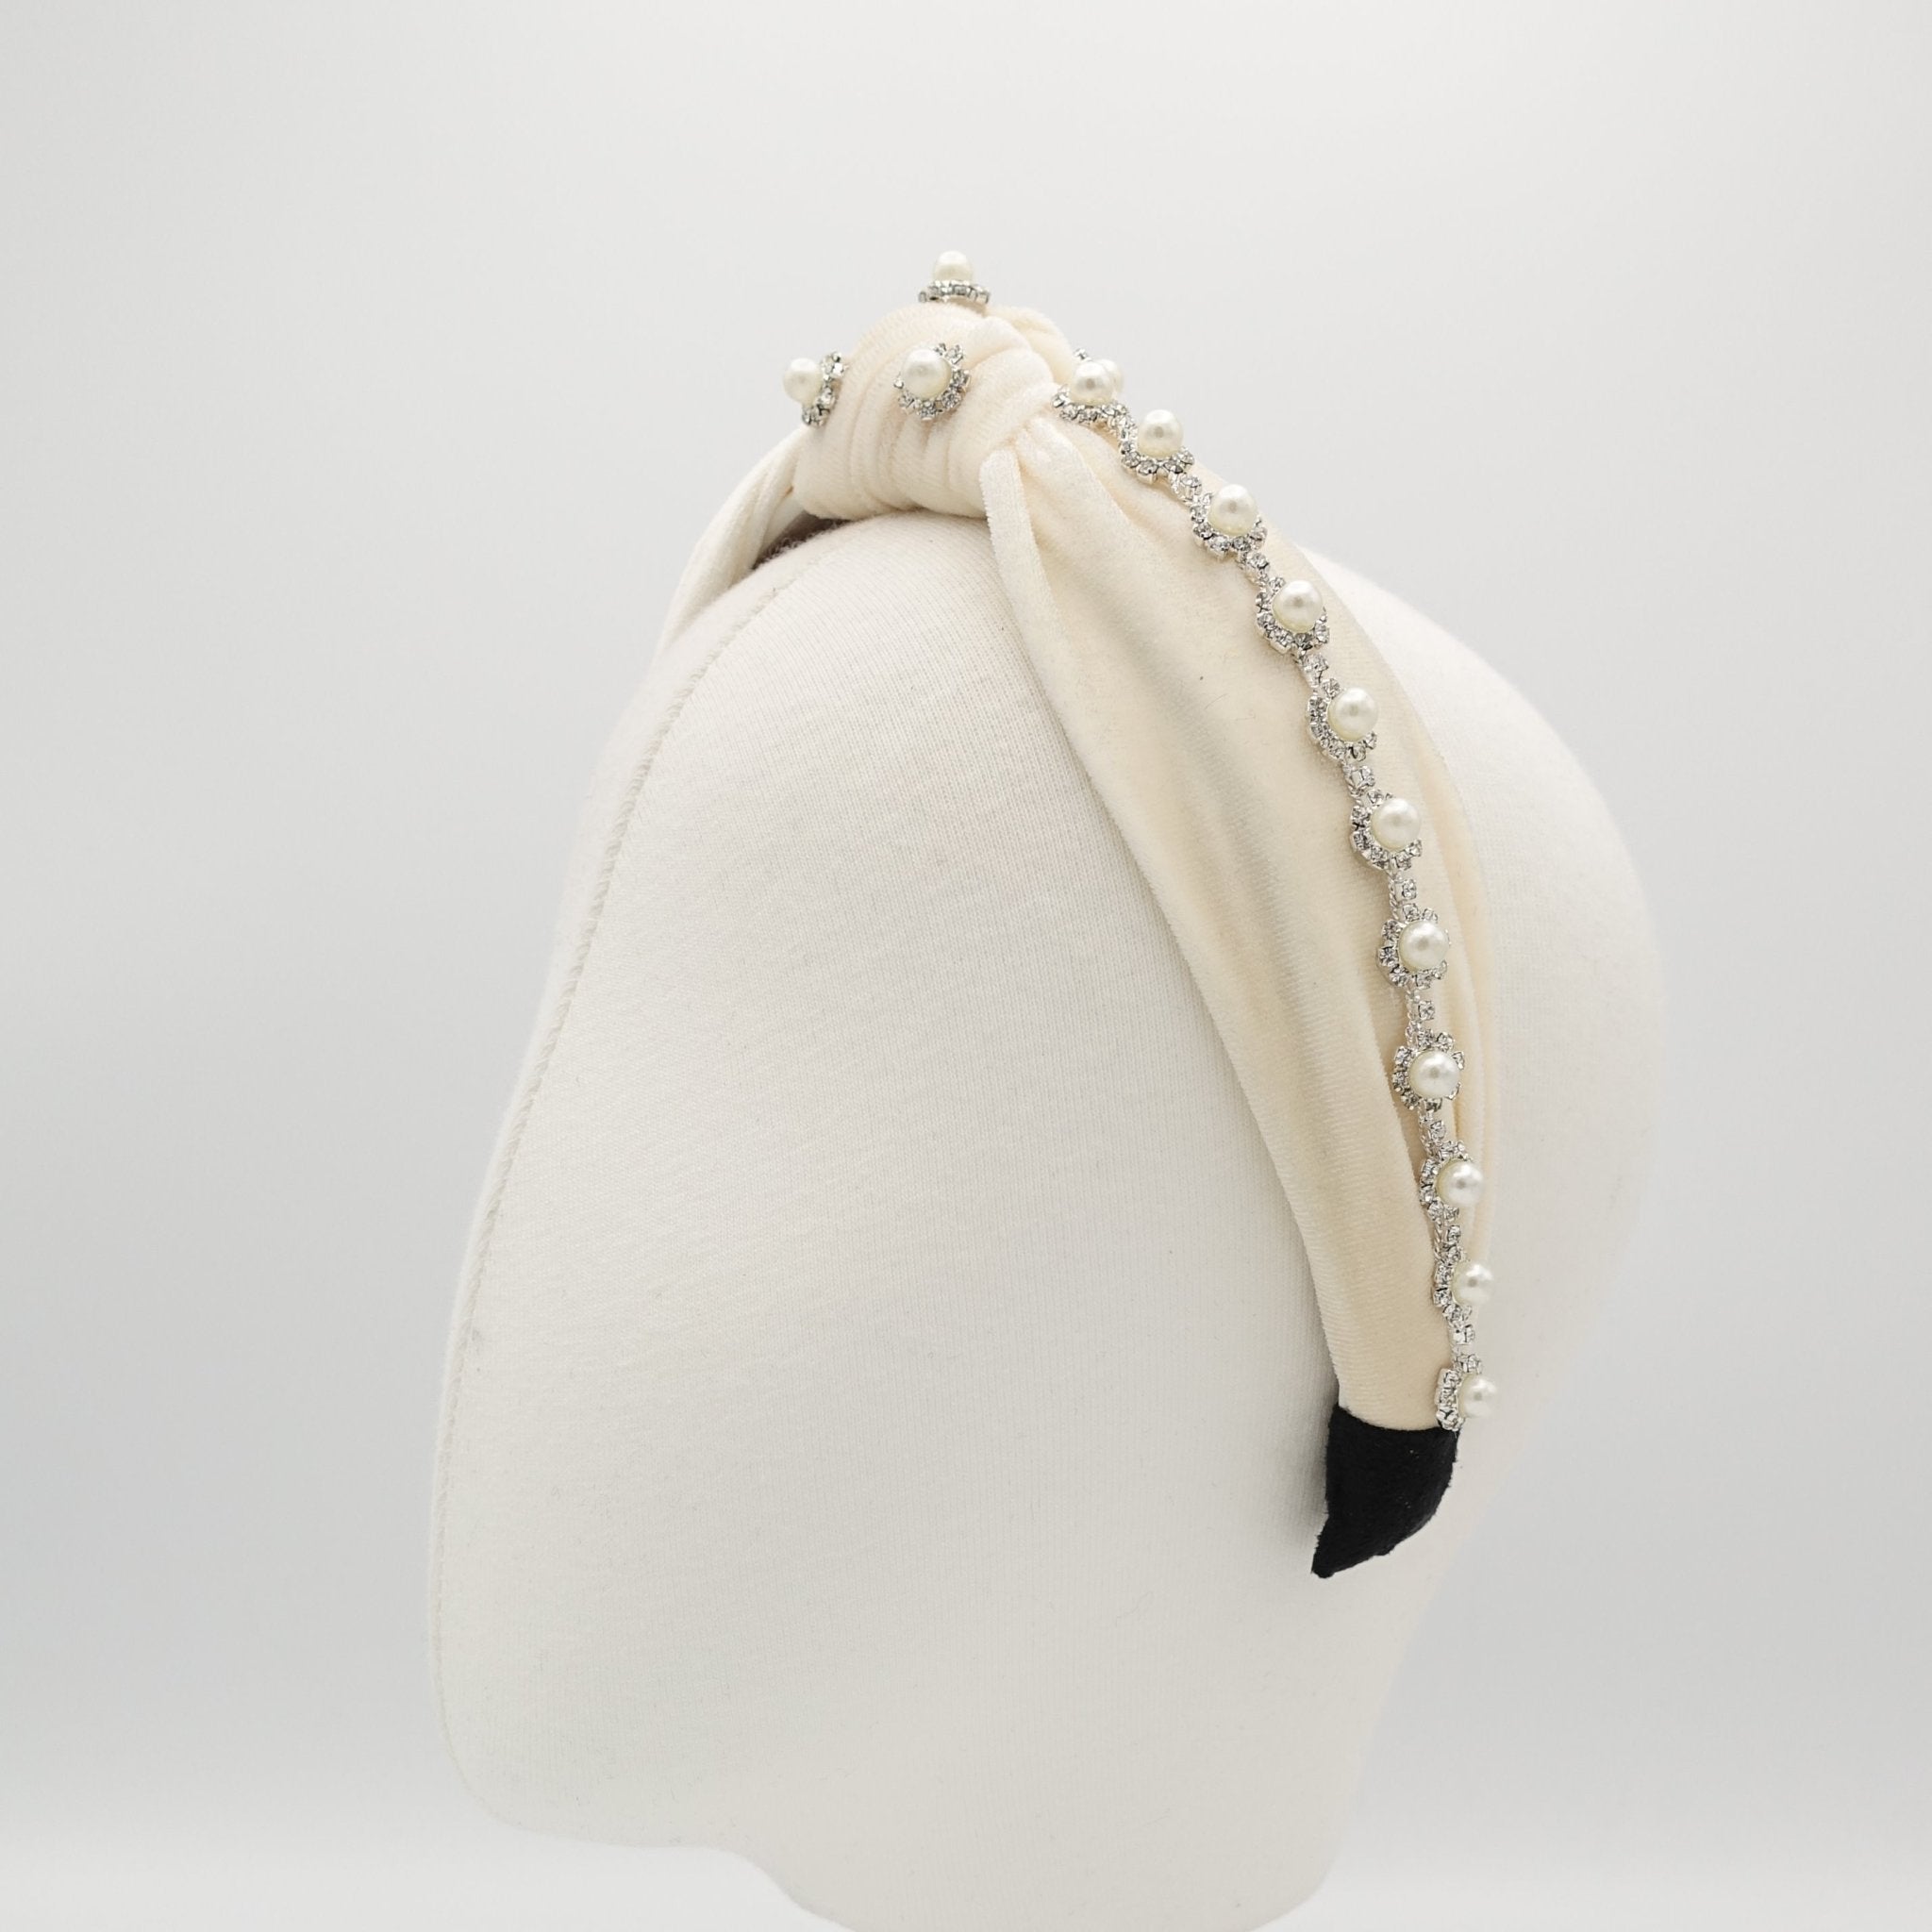 veryshine.com hairband/headband pearl rhinestone headband flower knotted velvet womens hairband accessory